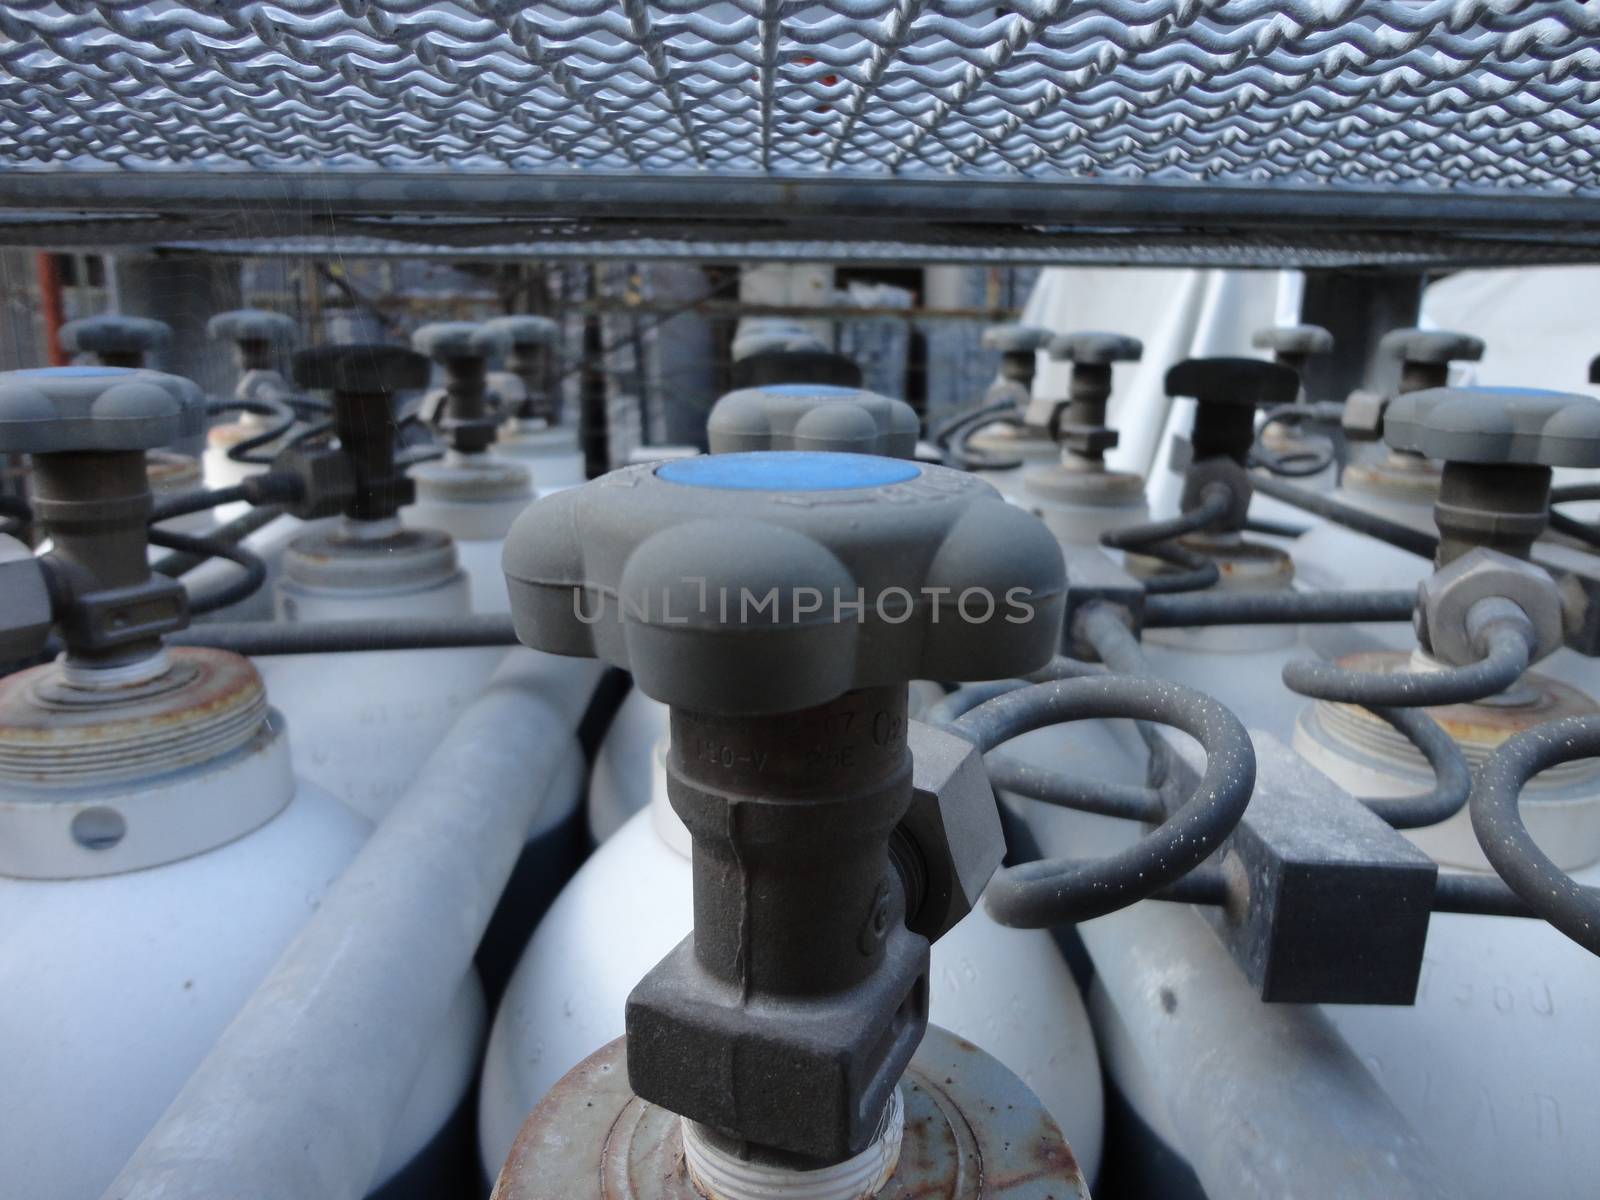 Factory Cylinder Valves by madfoto